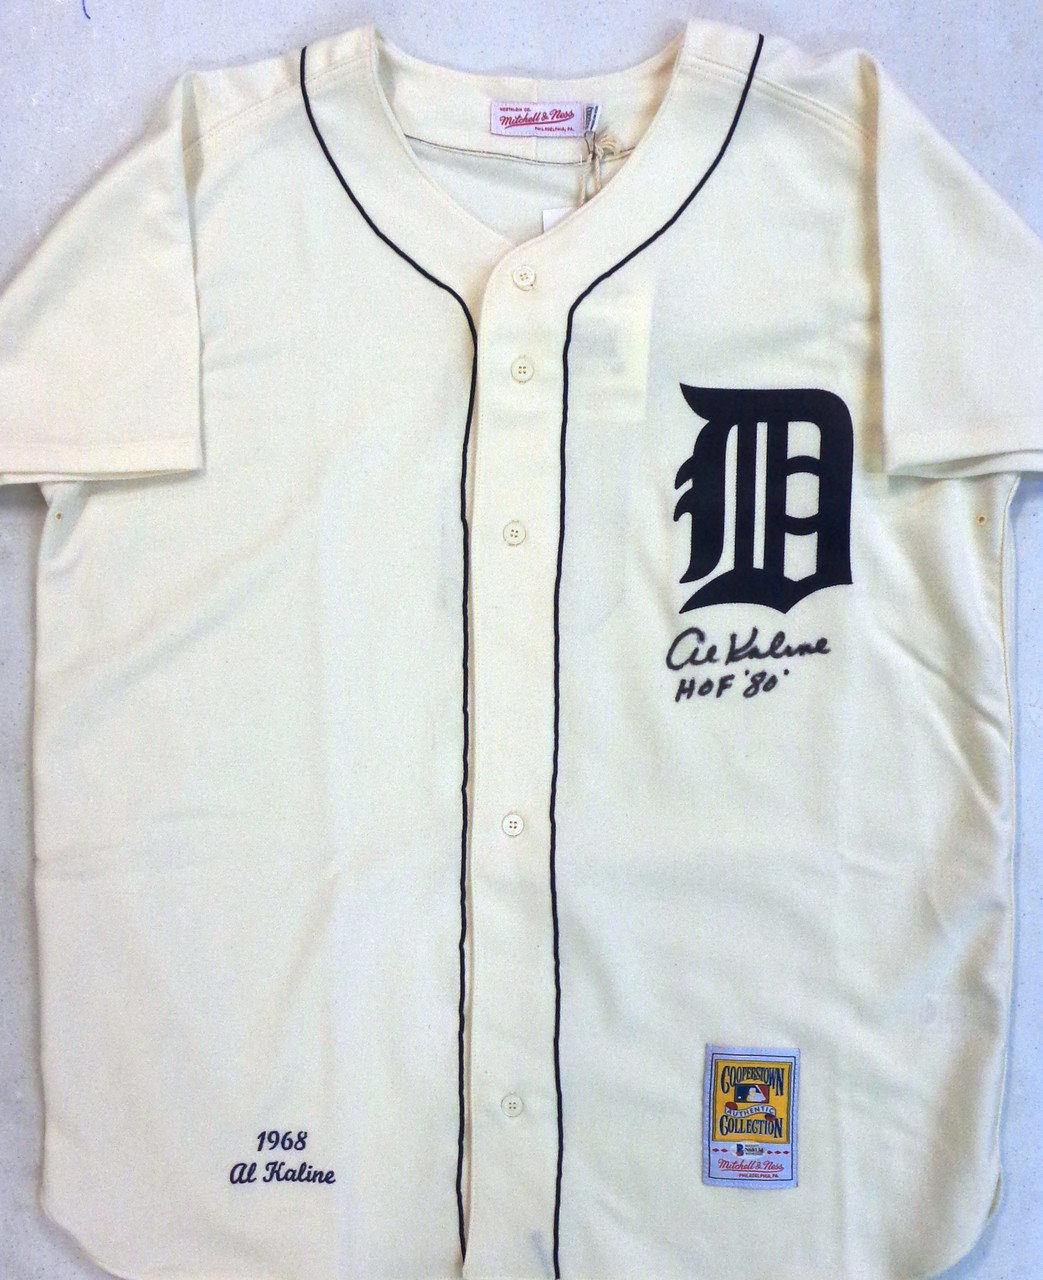 1968 detroit tigers jersey